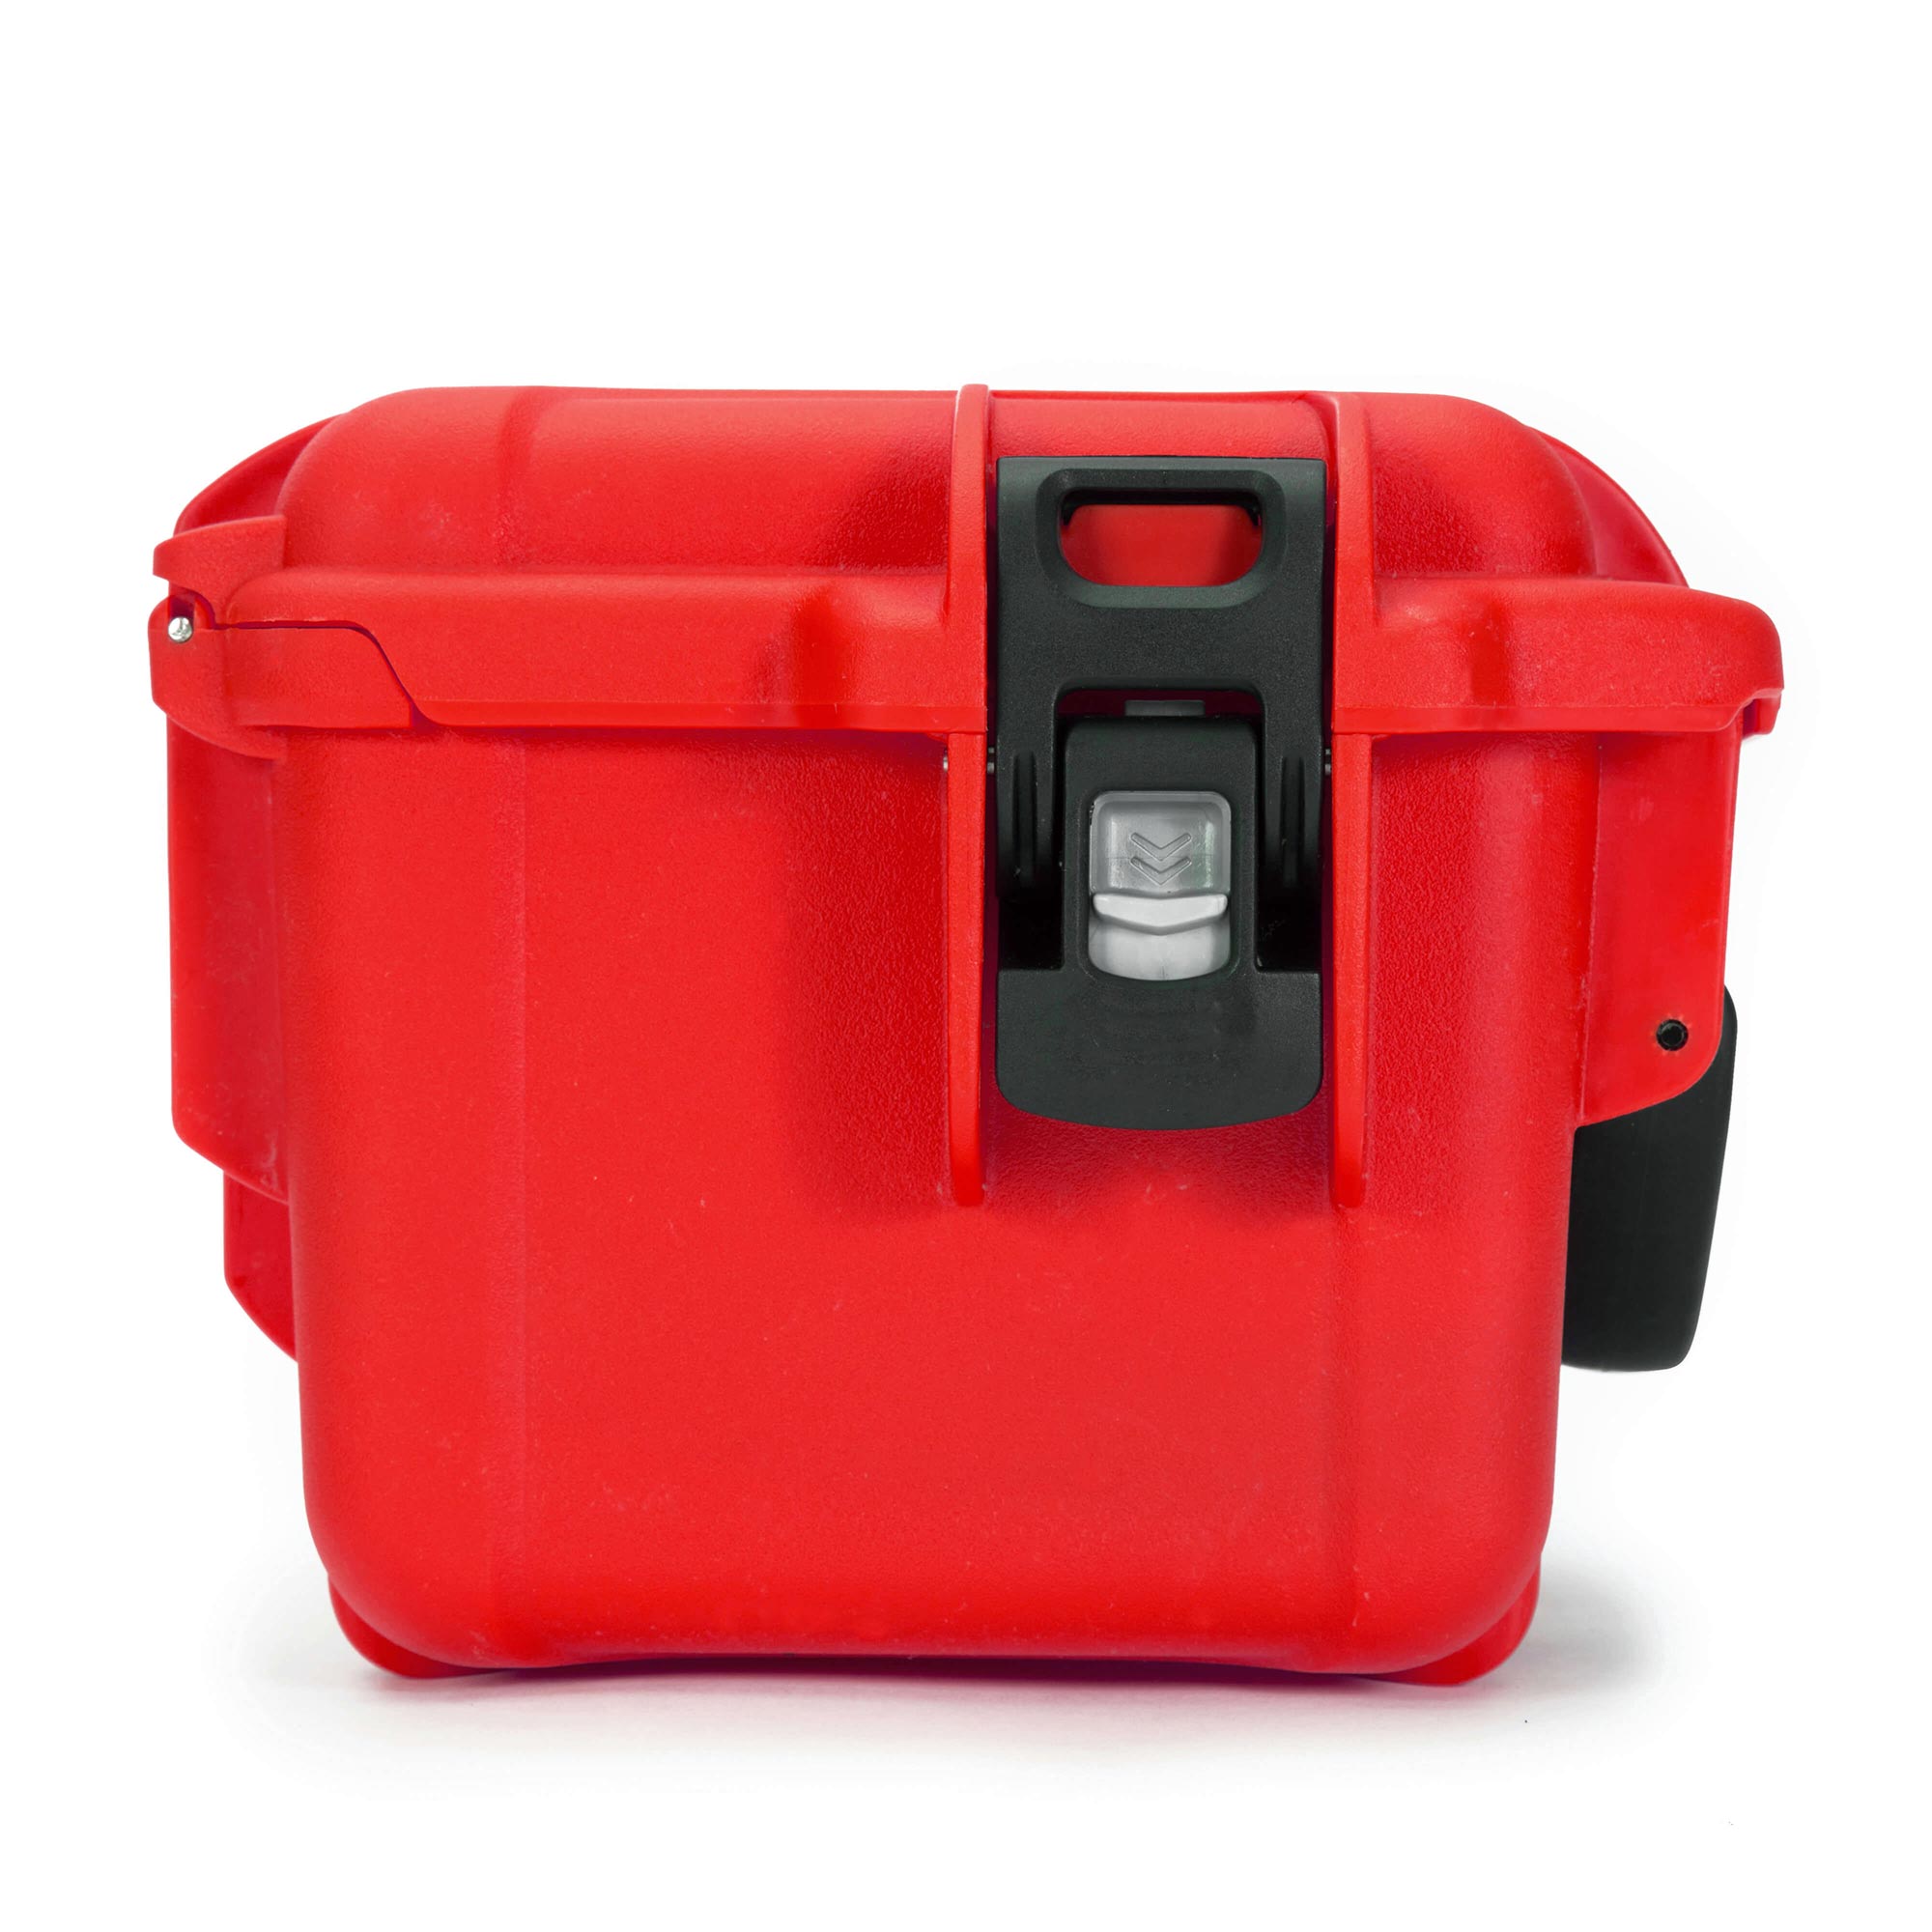 NANUK 908 First Aid case-Outdoor Case-Red-NANUK